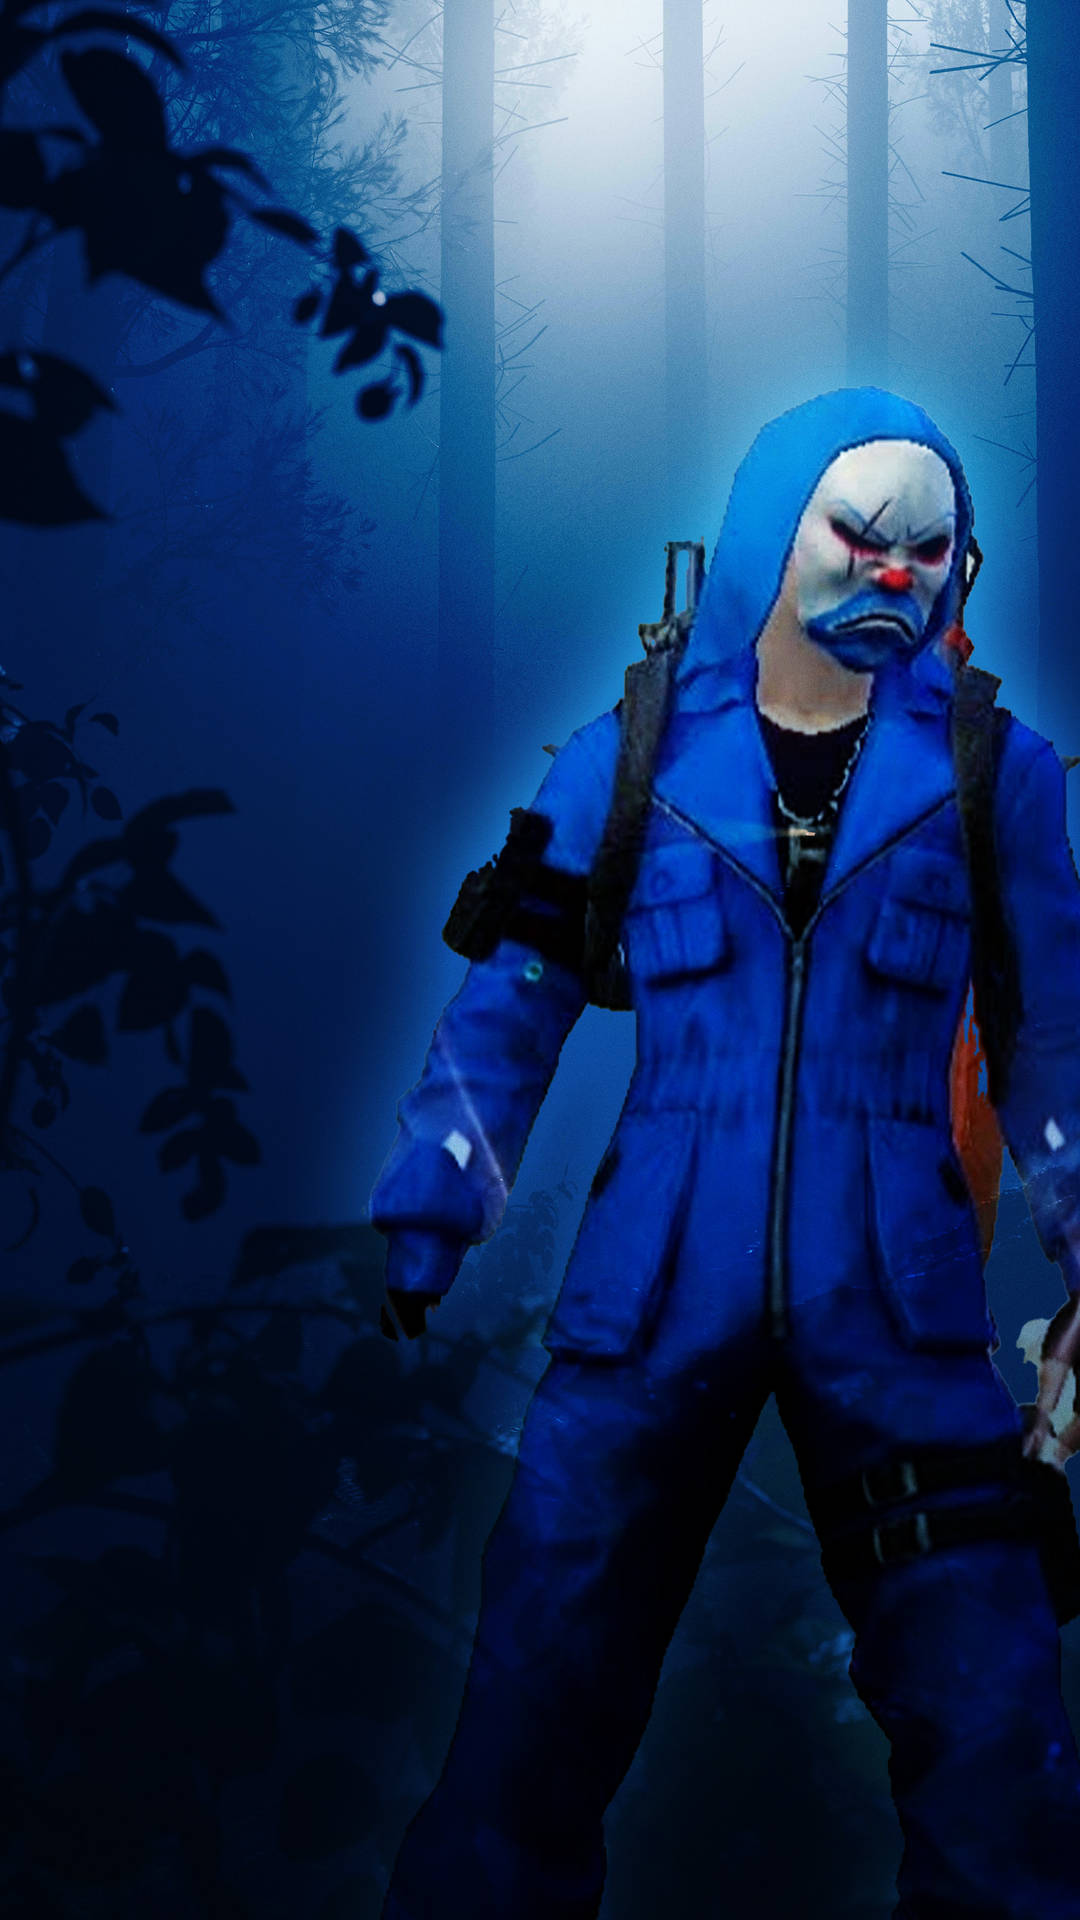 Blue Criminal Bundle Character In A Forest Wallpaper